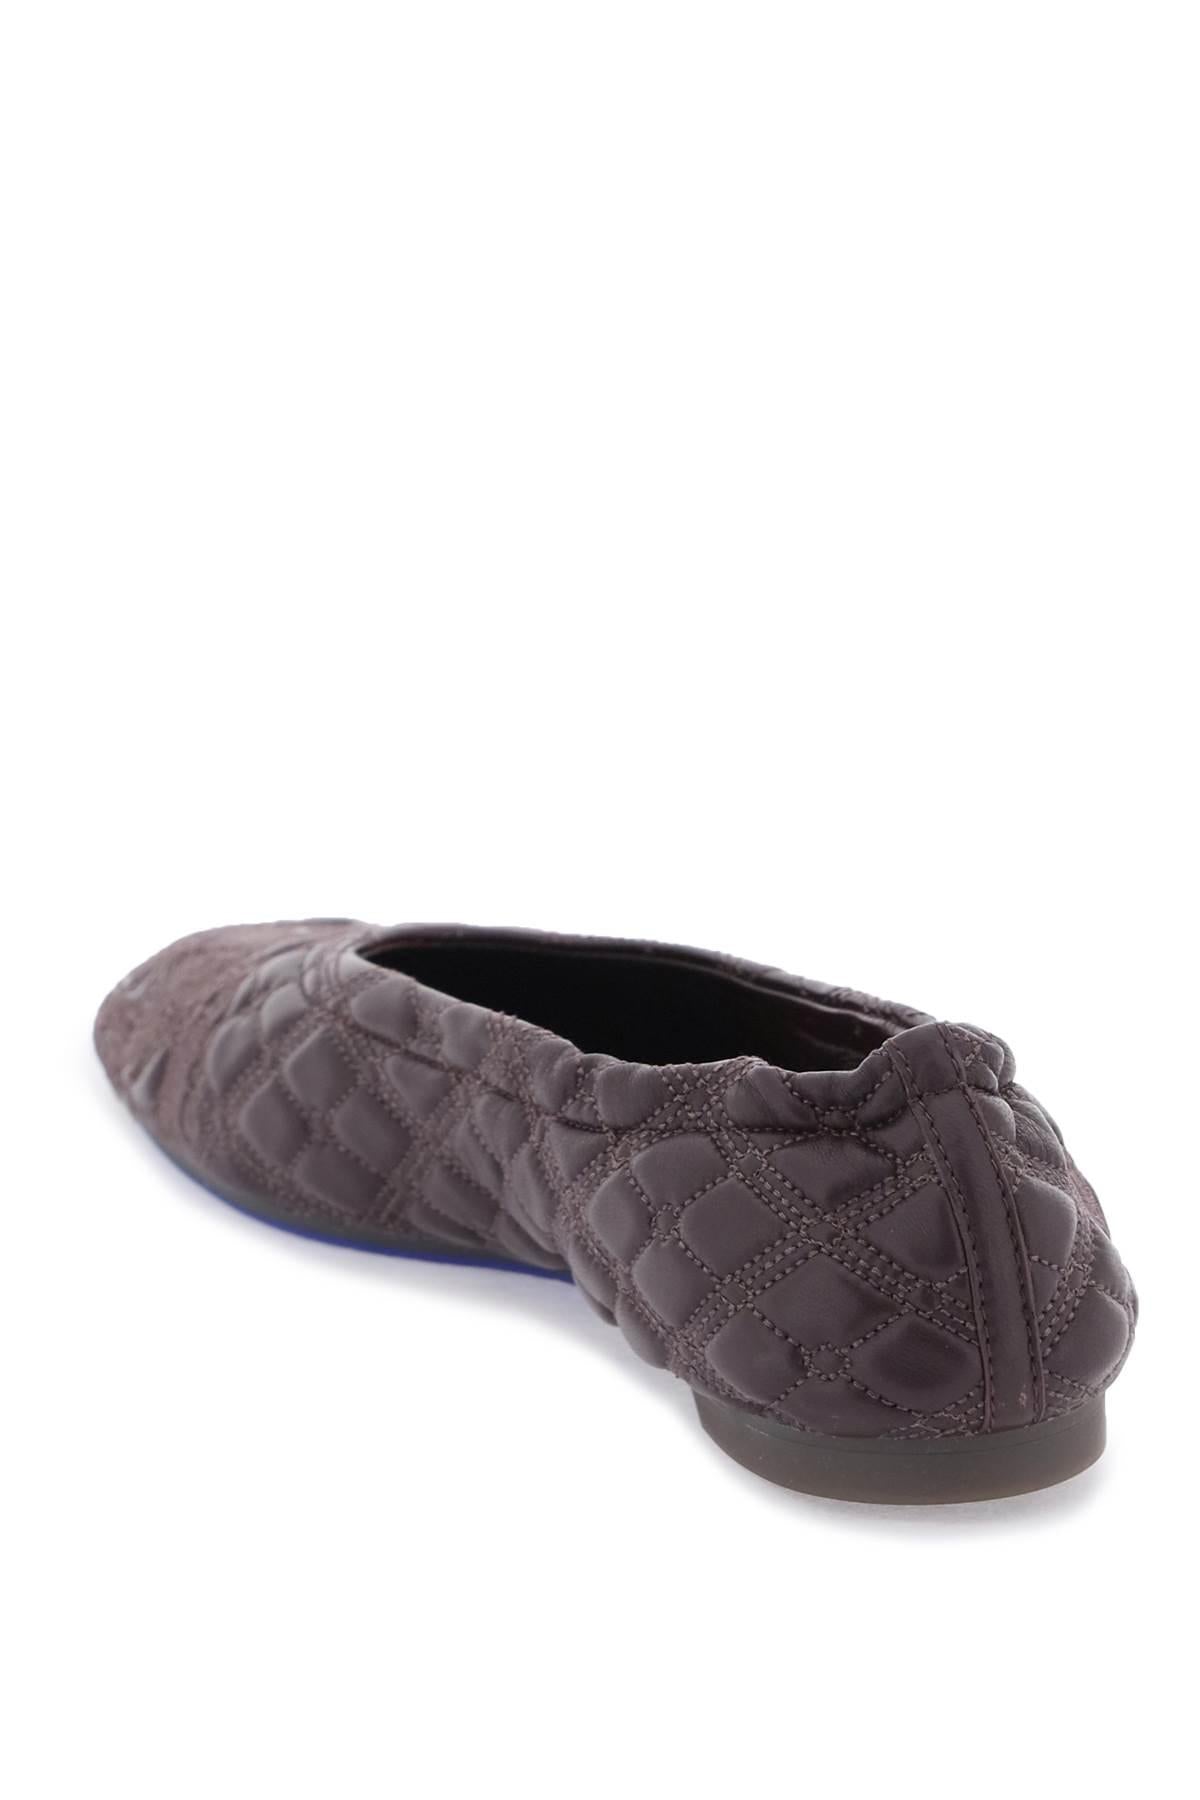 Burberry Sadler leather ballerina shoes - Brown